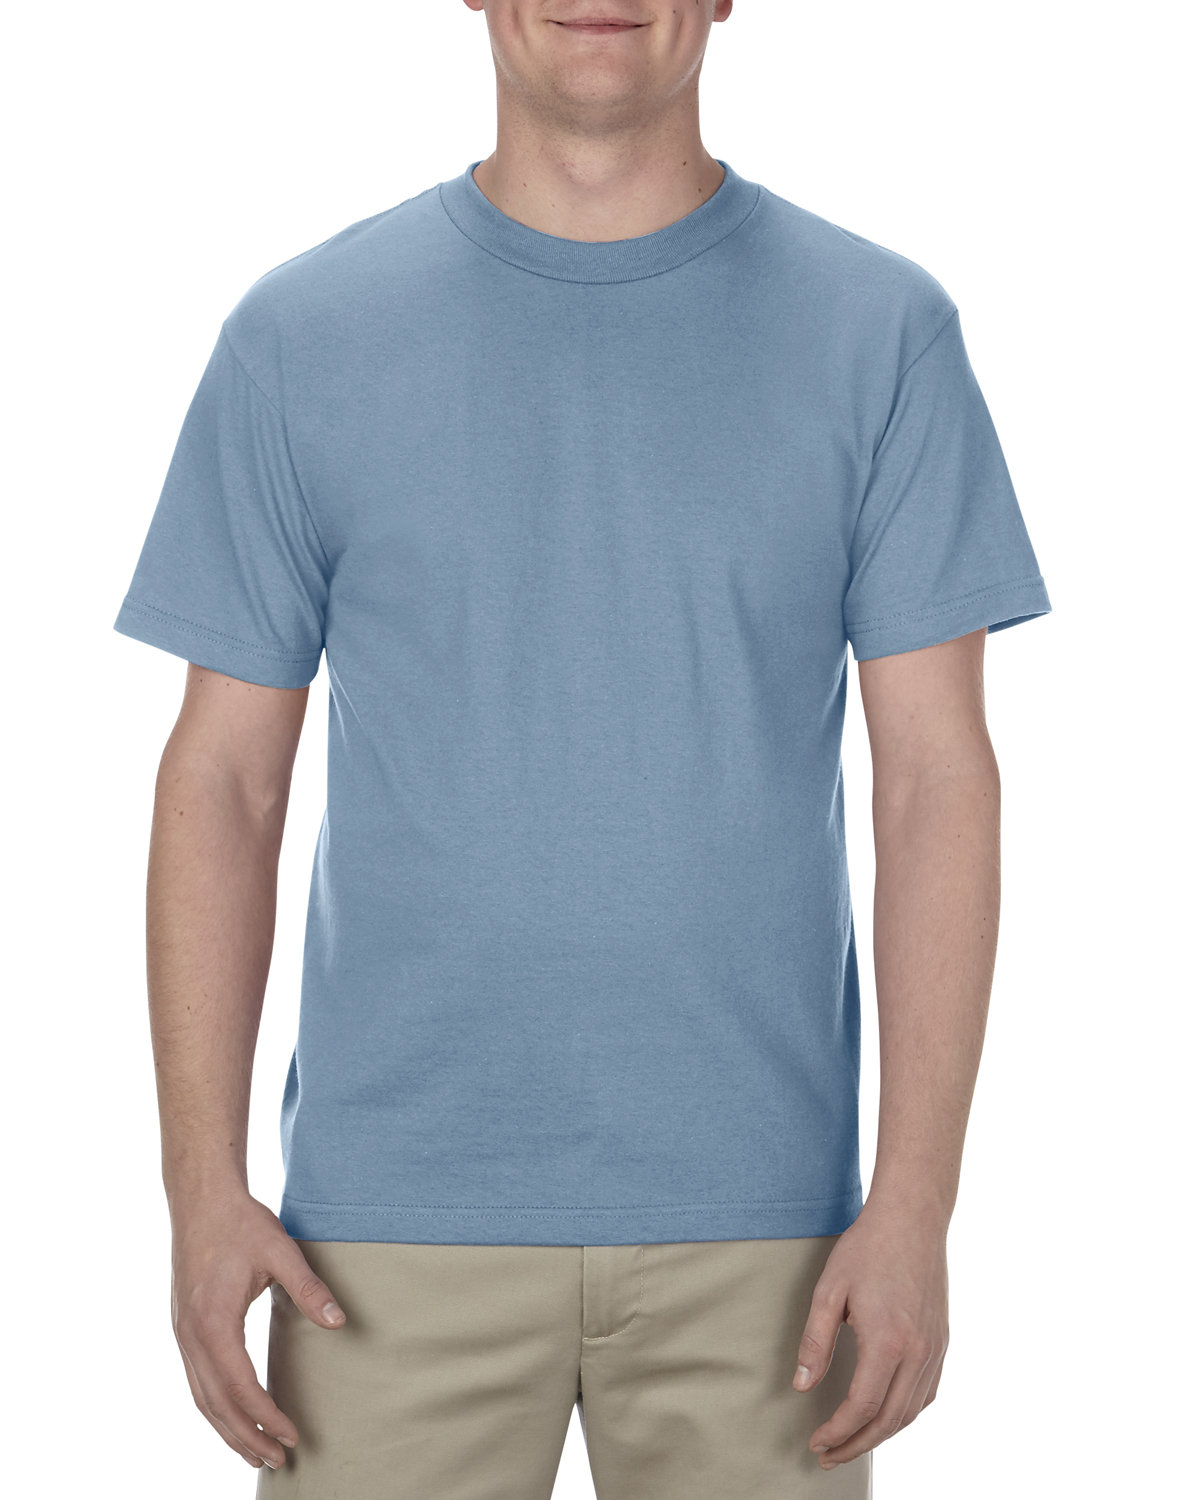 American Apparel Unisex Heavyweight Cotton T-Shirt slate 